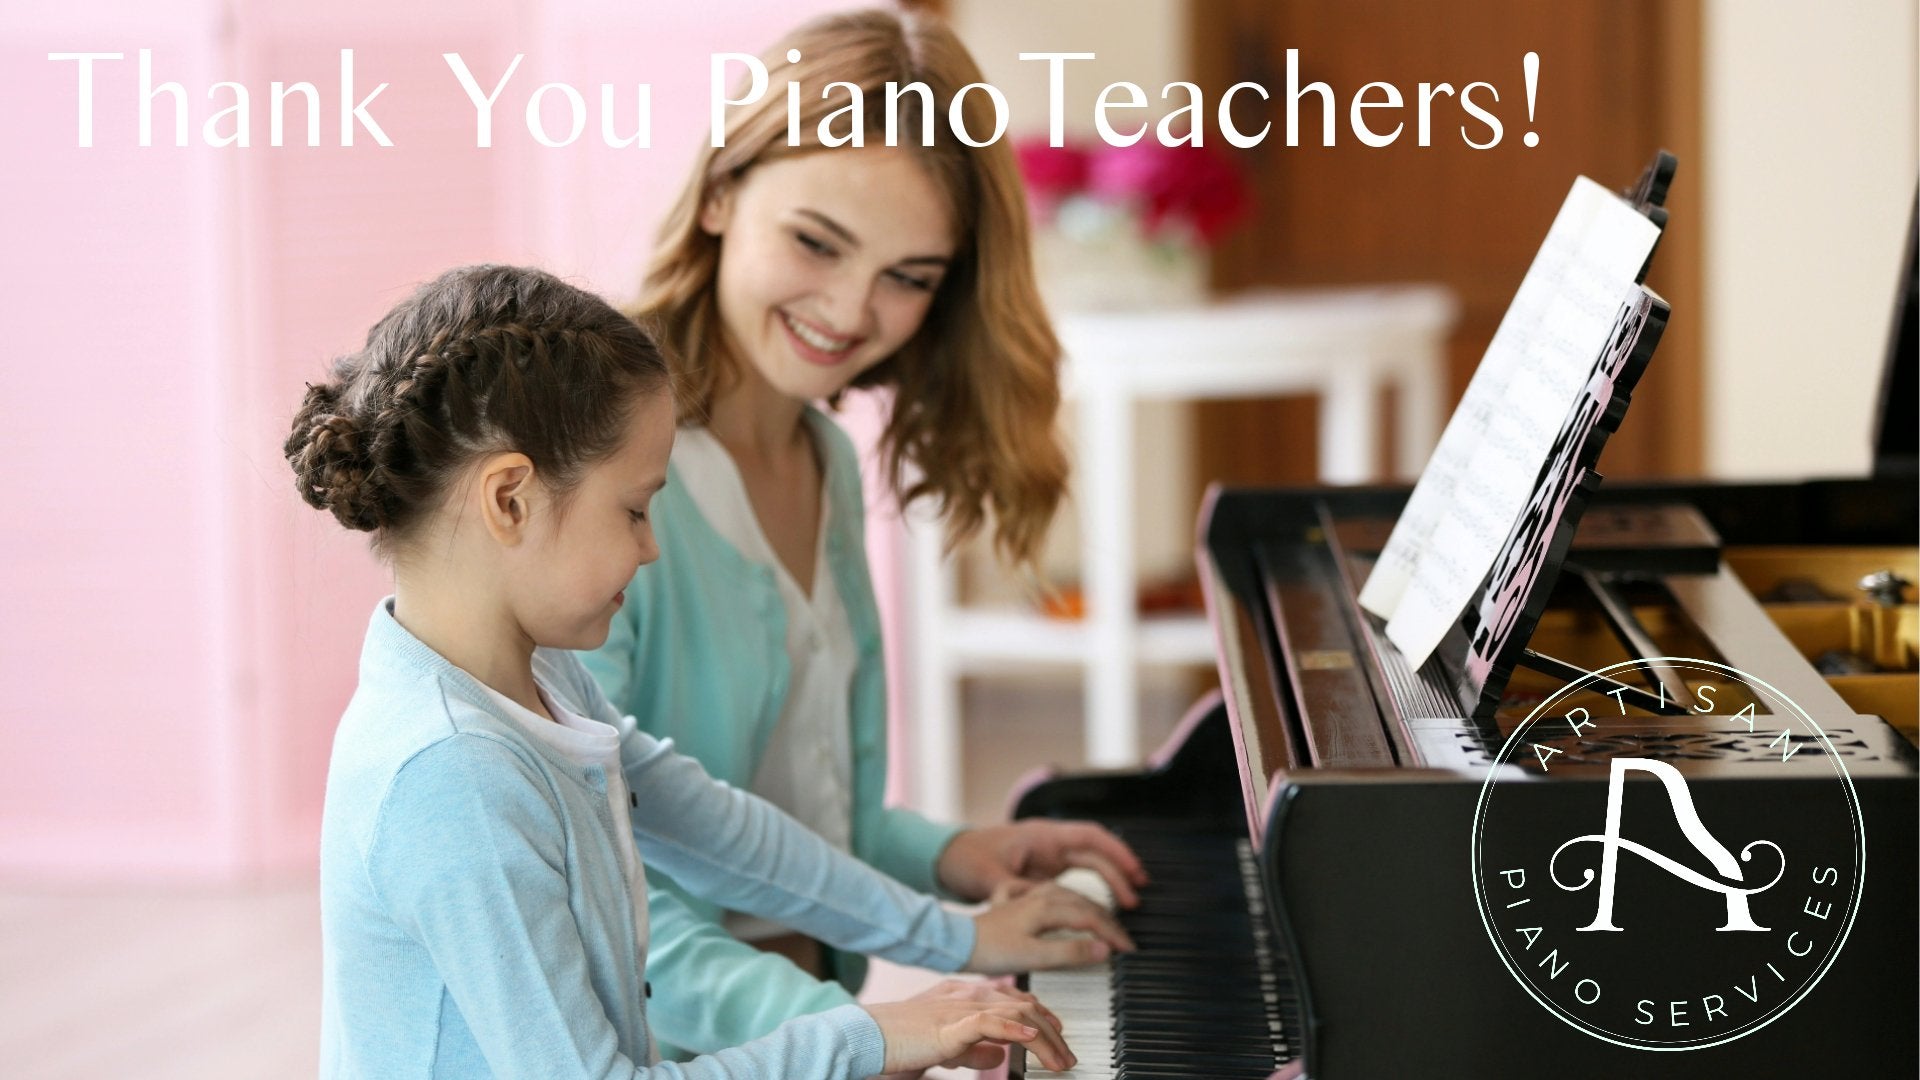 Thank you Piano Teachers! - Artisan Piano Services